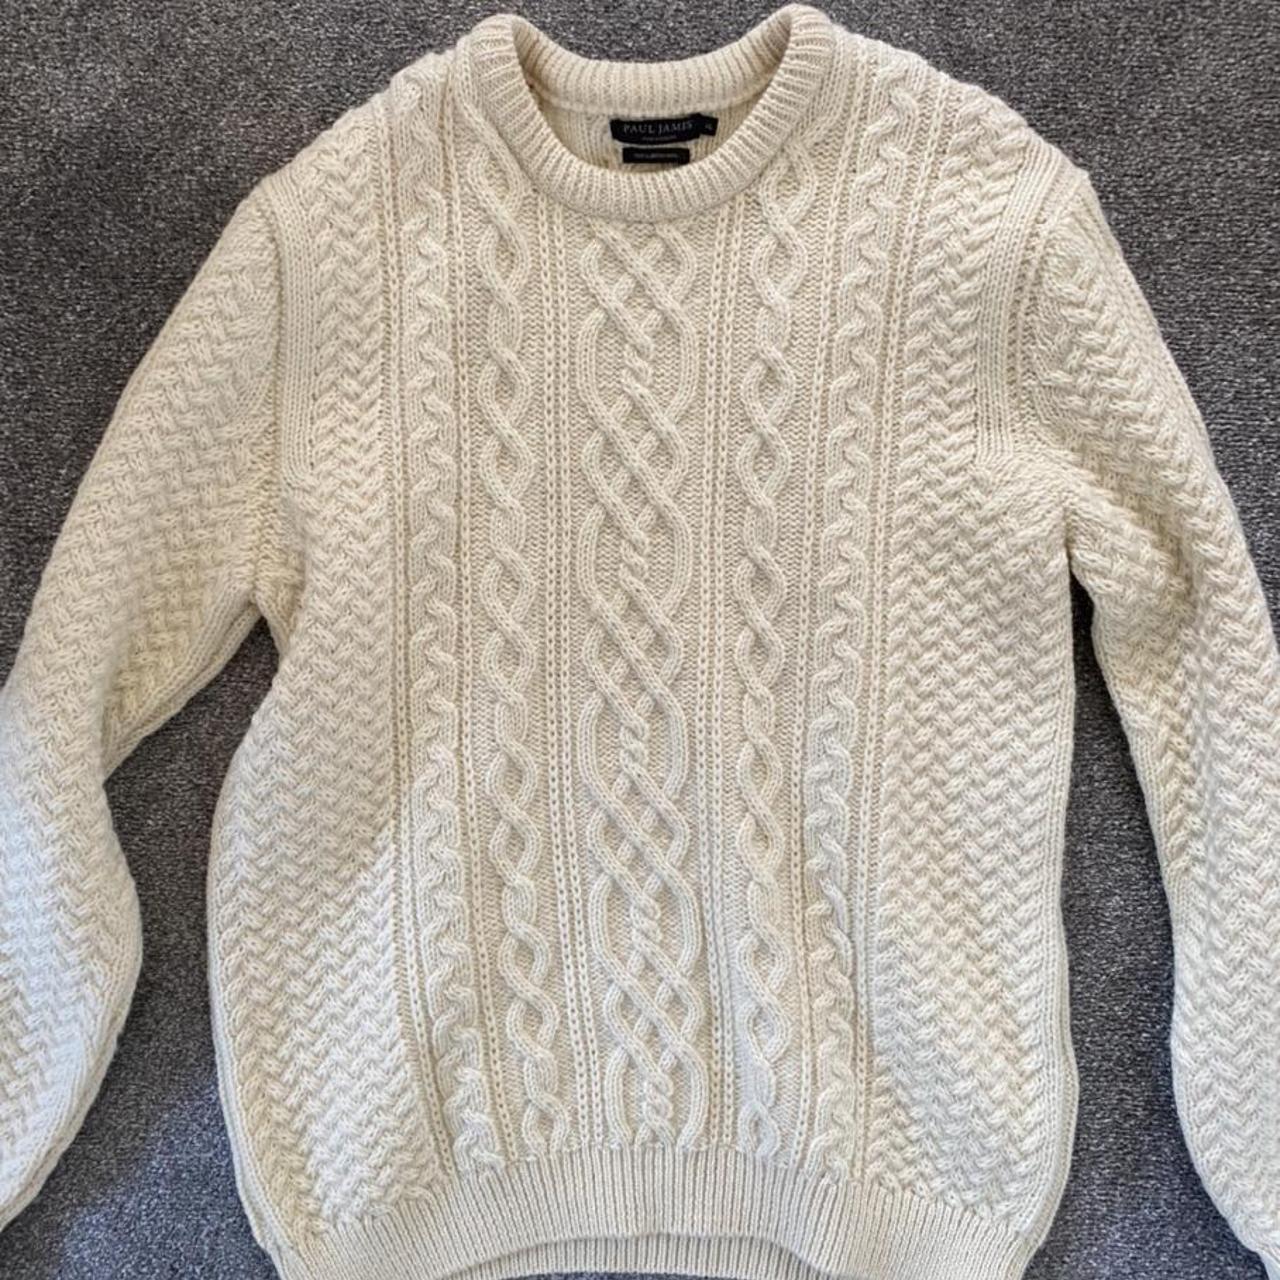 Paul James knitted jumper 100% British wool Never... - Depop